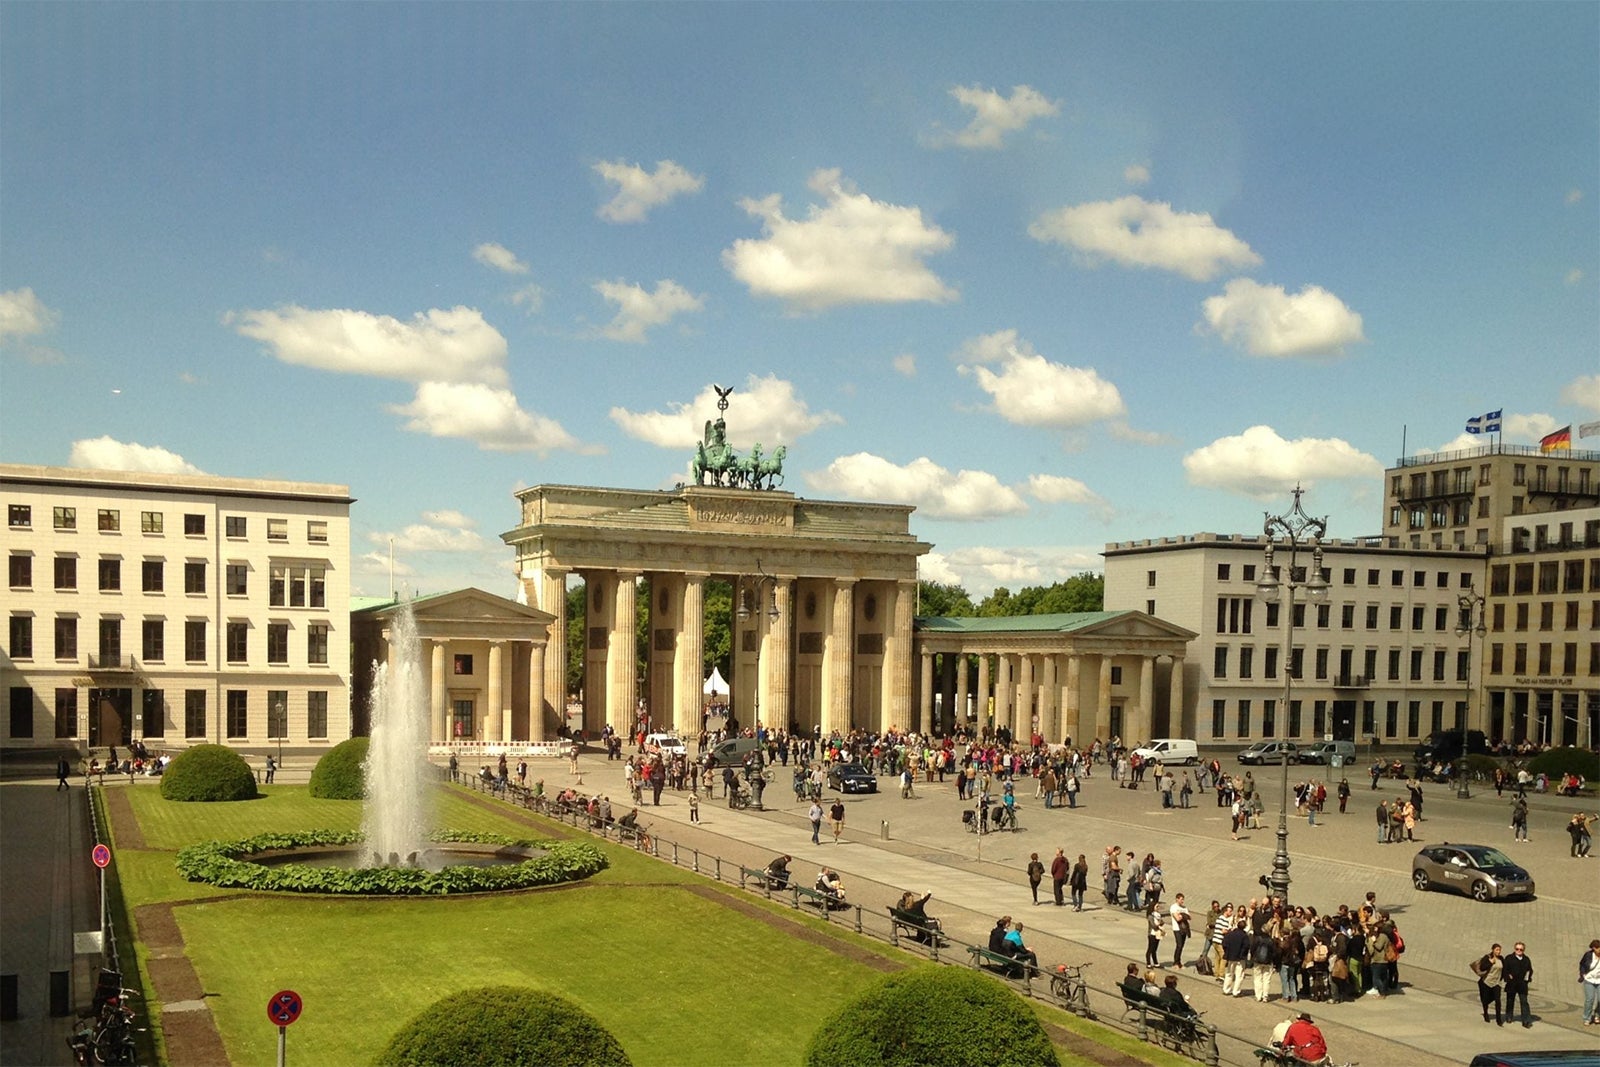 View of Brandenburg gate from the Adlon Kempinski hotel in Berlin.